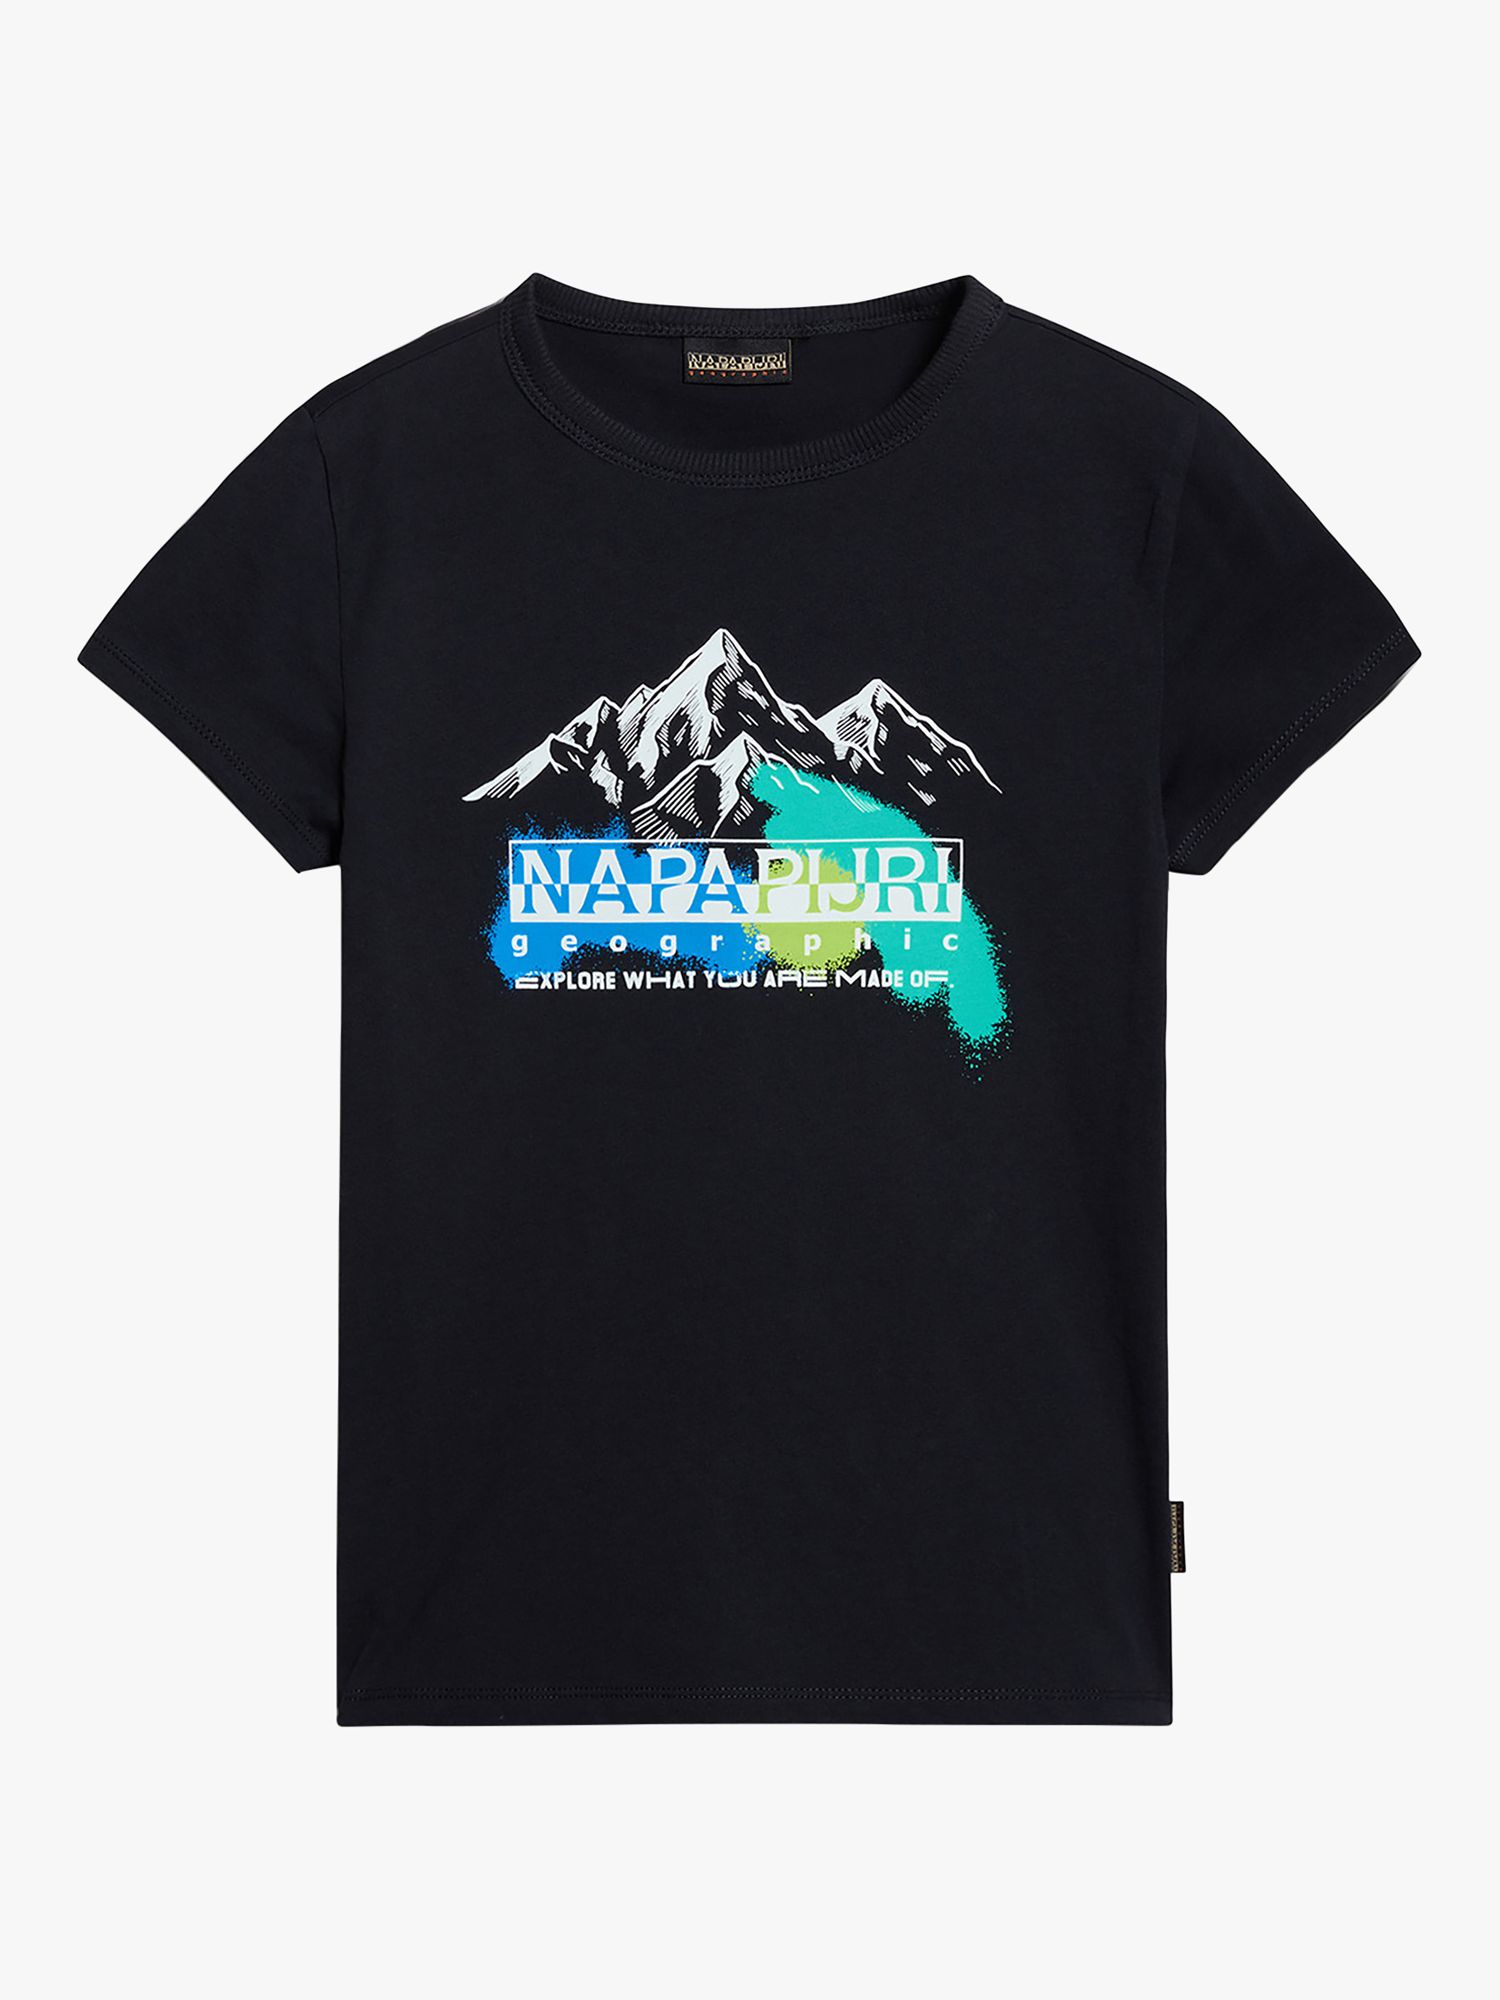 Napapijri Kids' Liard Mountain Graphic T-Shirt, Black, 8 years